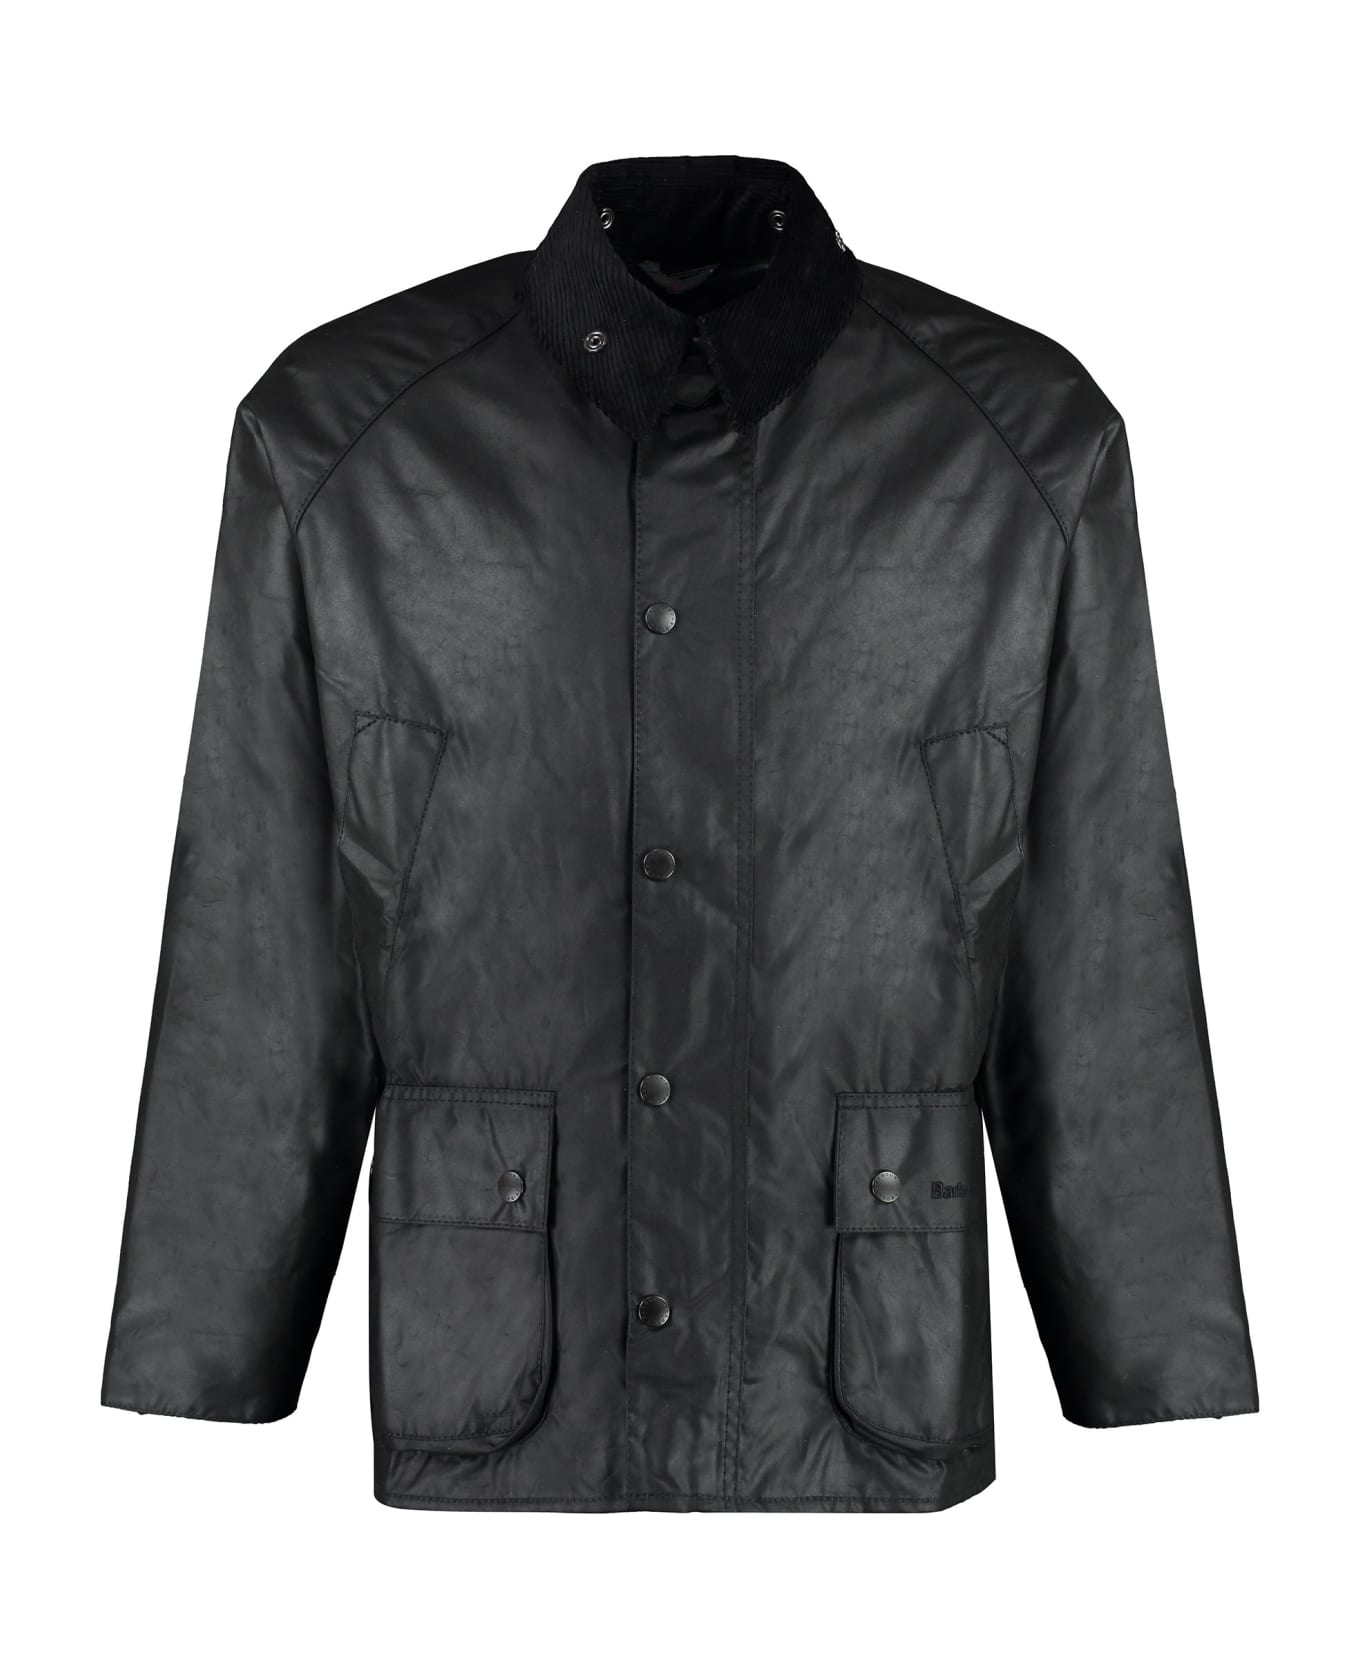 Barbour Bedale Waxed Cotton Jacket - black